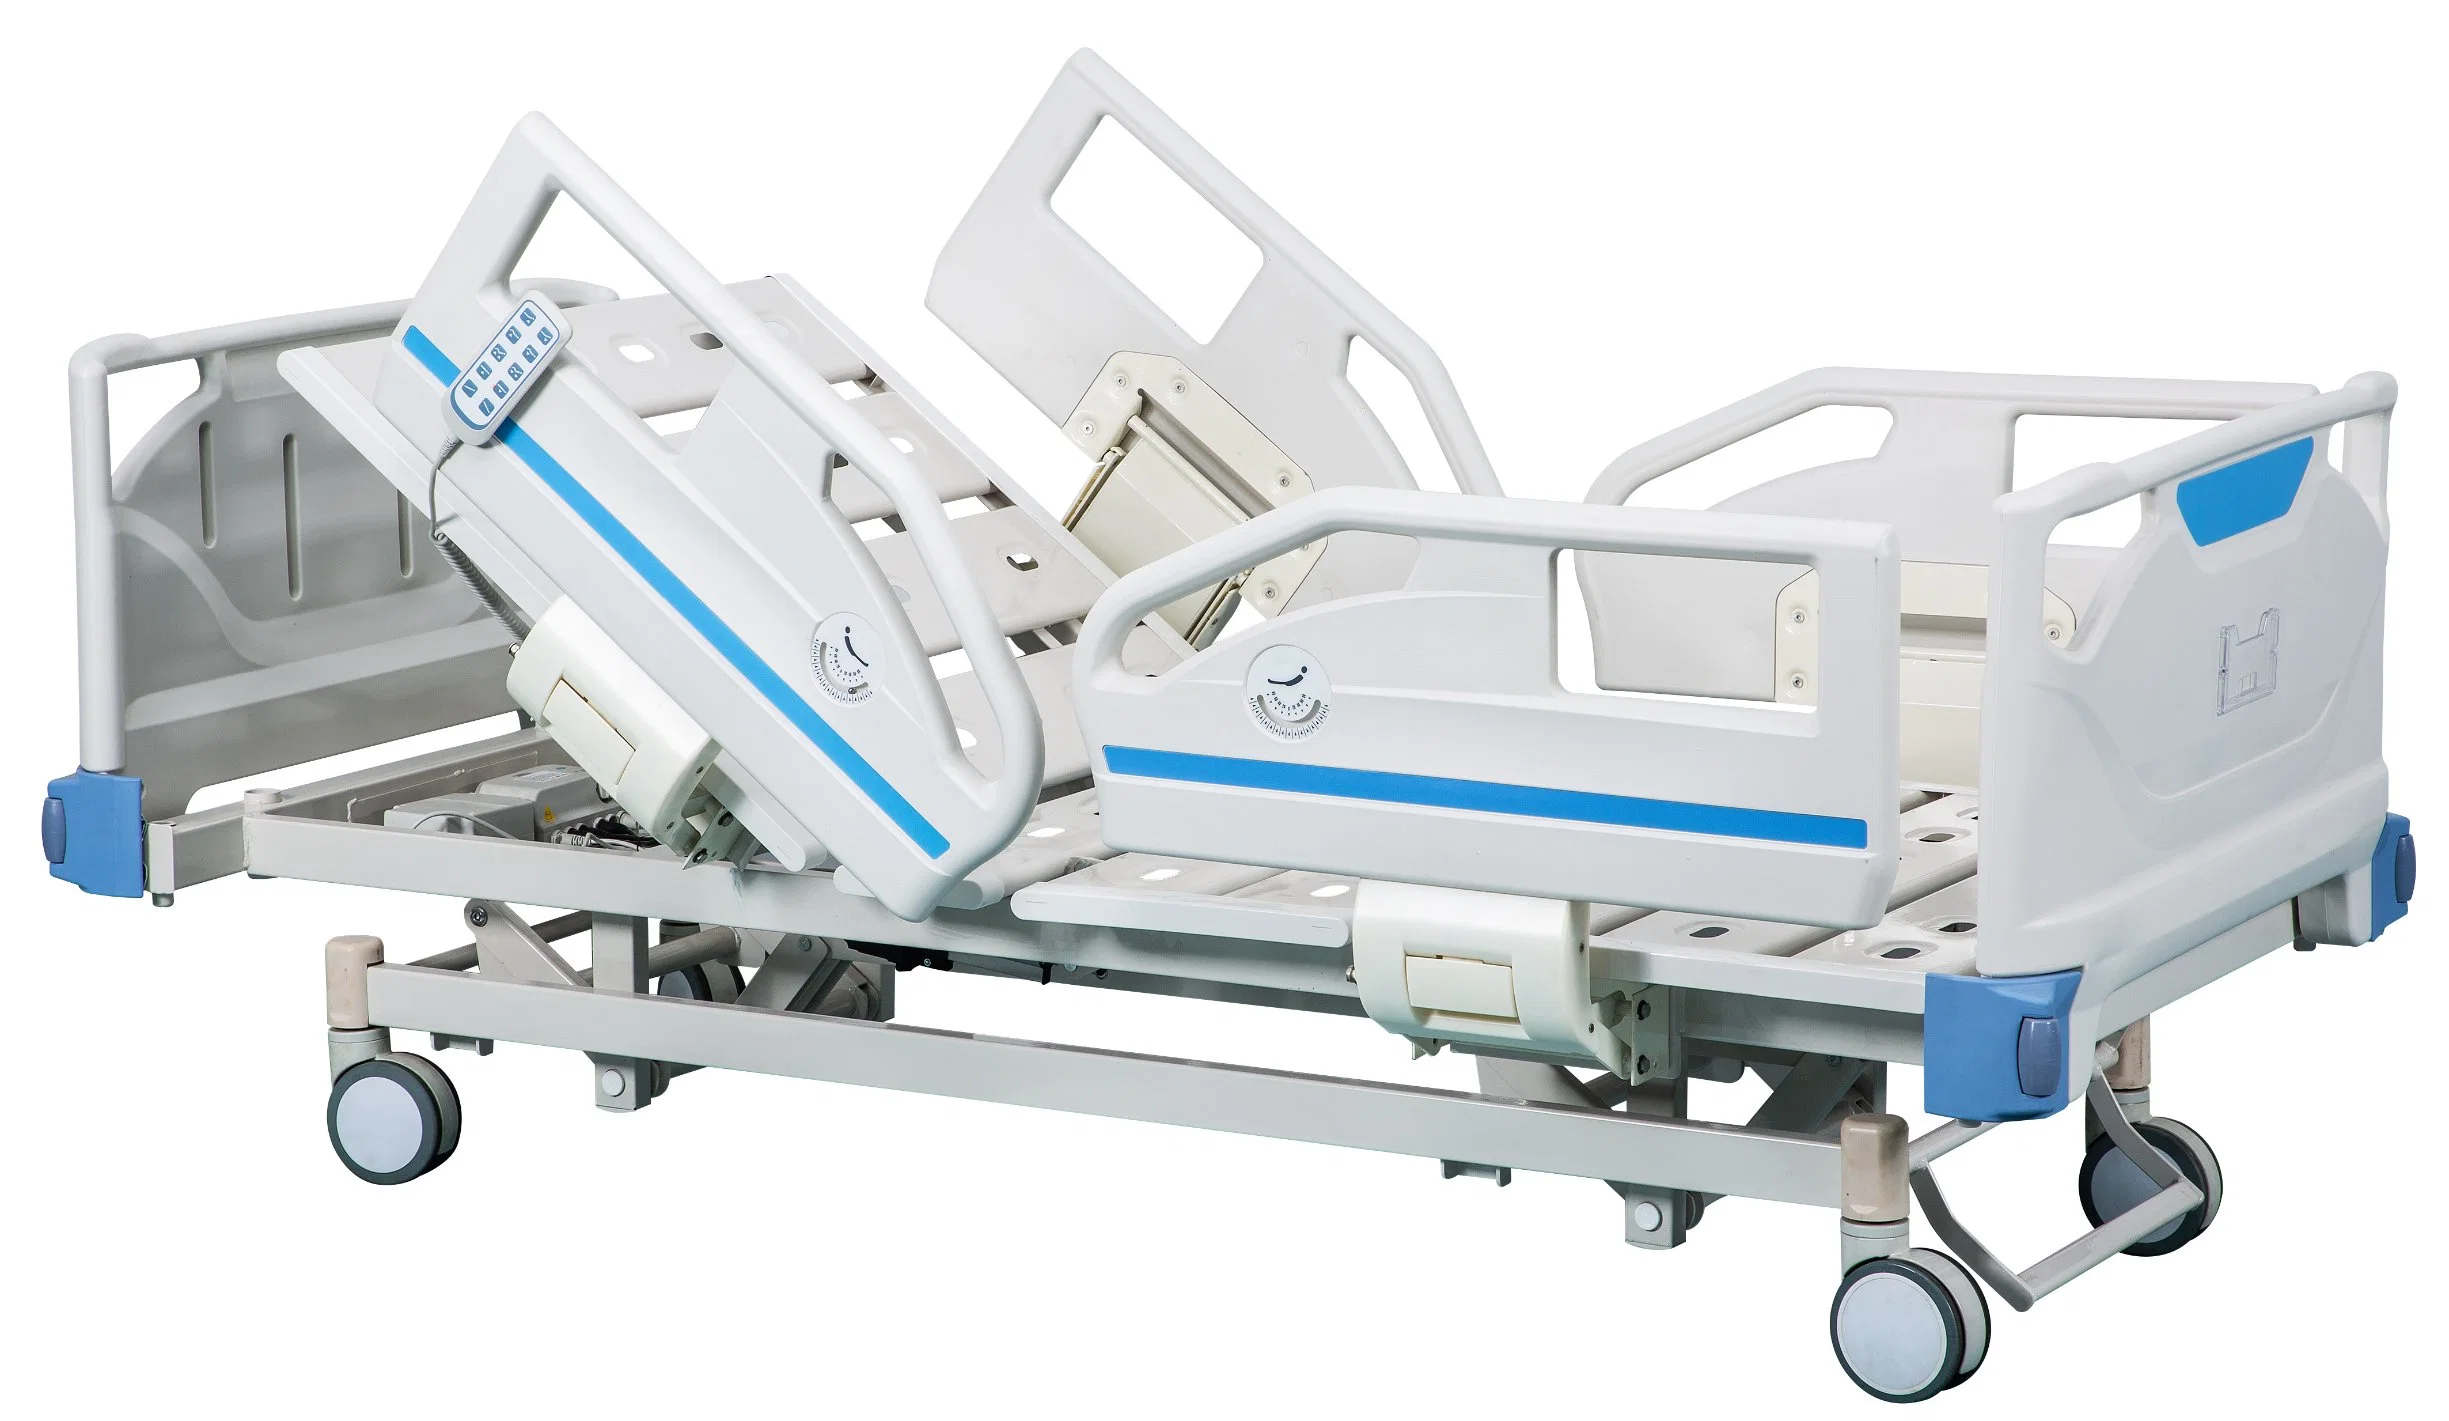 Adjustable Five Function Electric ICU Hospital Medical Bed